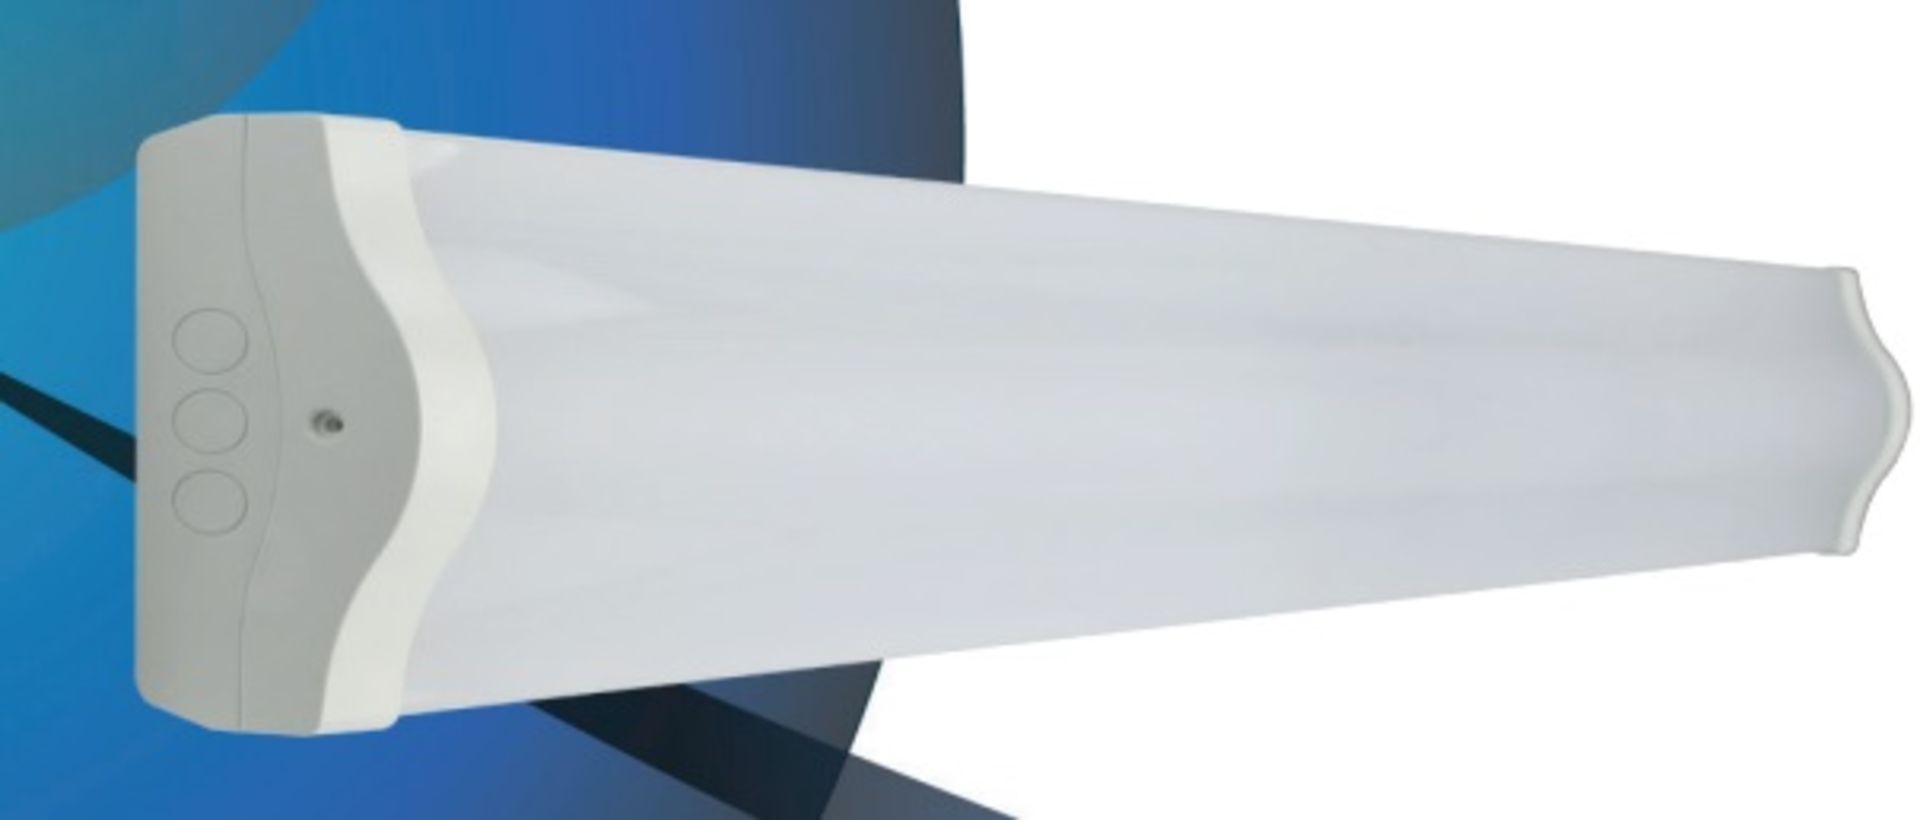 40 x Scholar Luminaire 6ft LED Lights | SCH60/840 | Total Cost £972